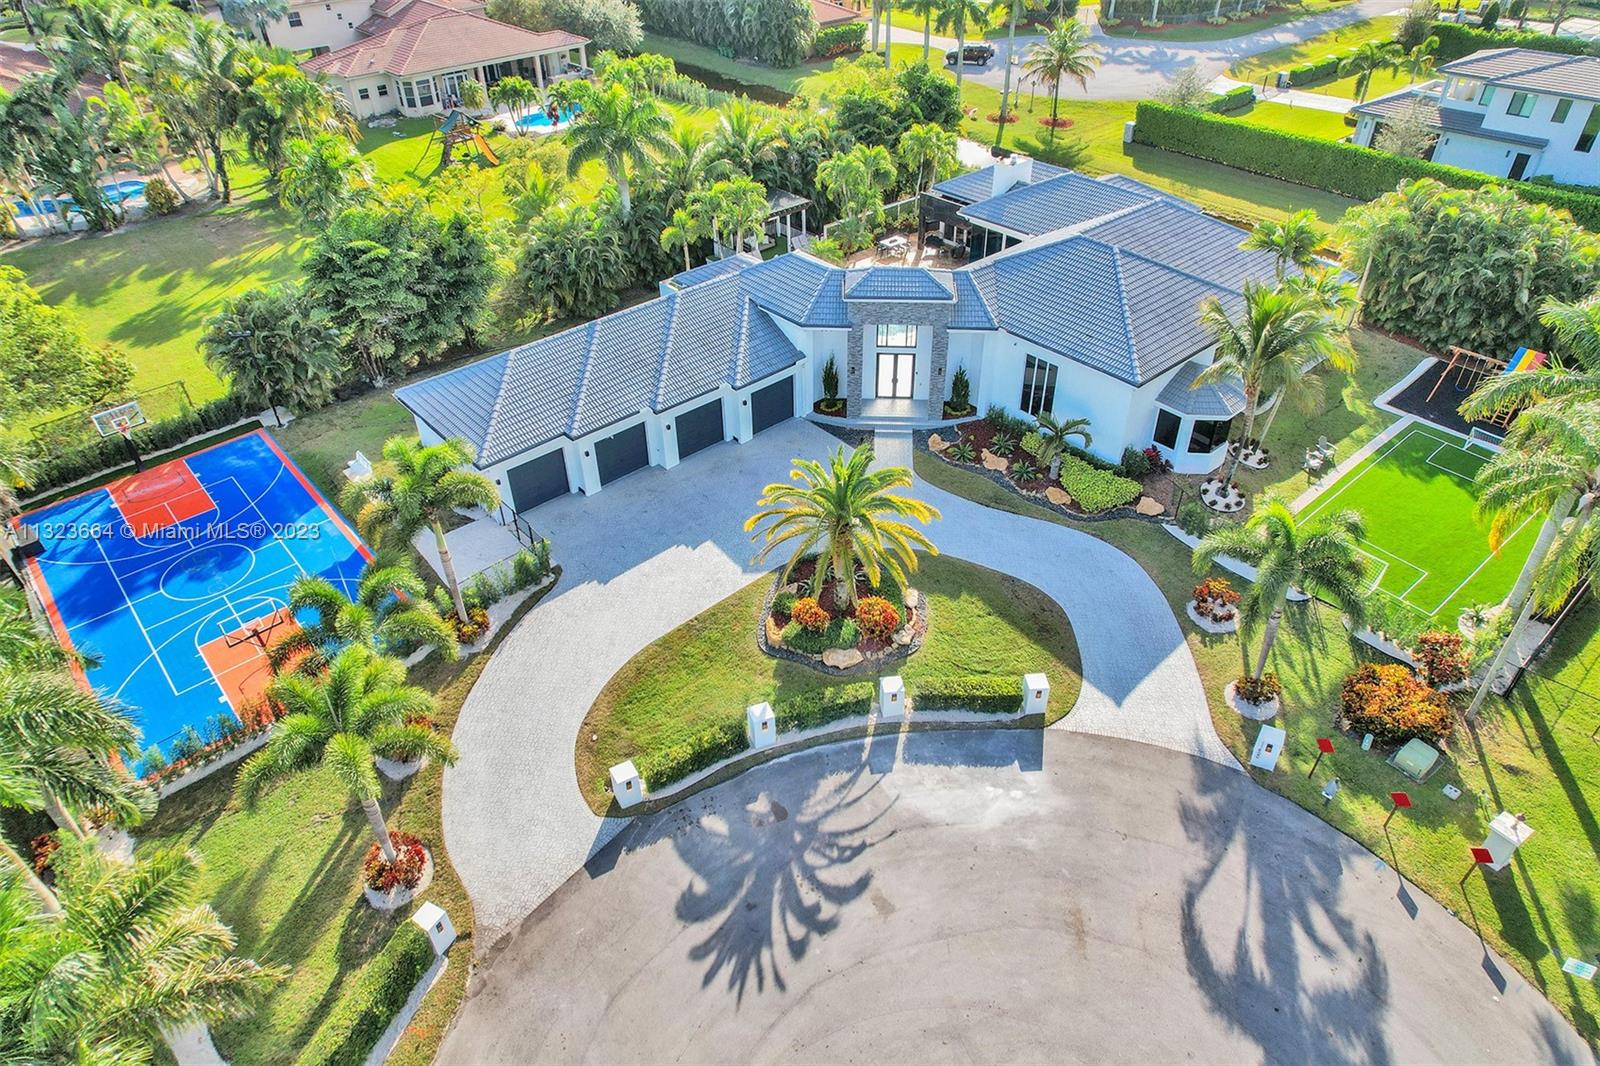 Rental Property at 11400 Nw 7th St, Plantation, Miami-Dade County, Florida - Bedrooms: 9 
Bathrooms: 5  - $34,000 MO.